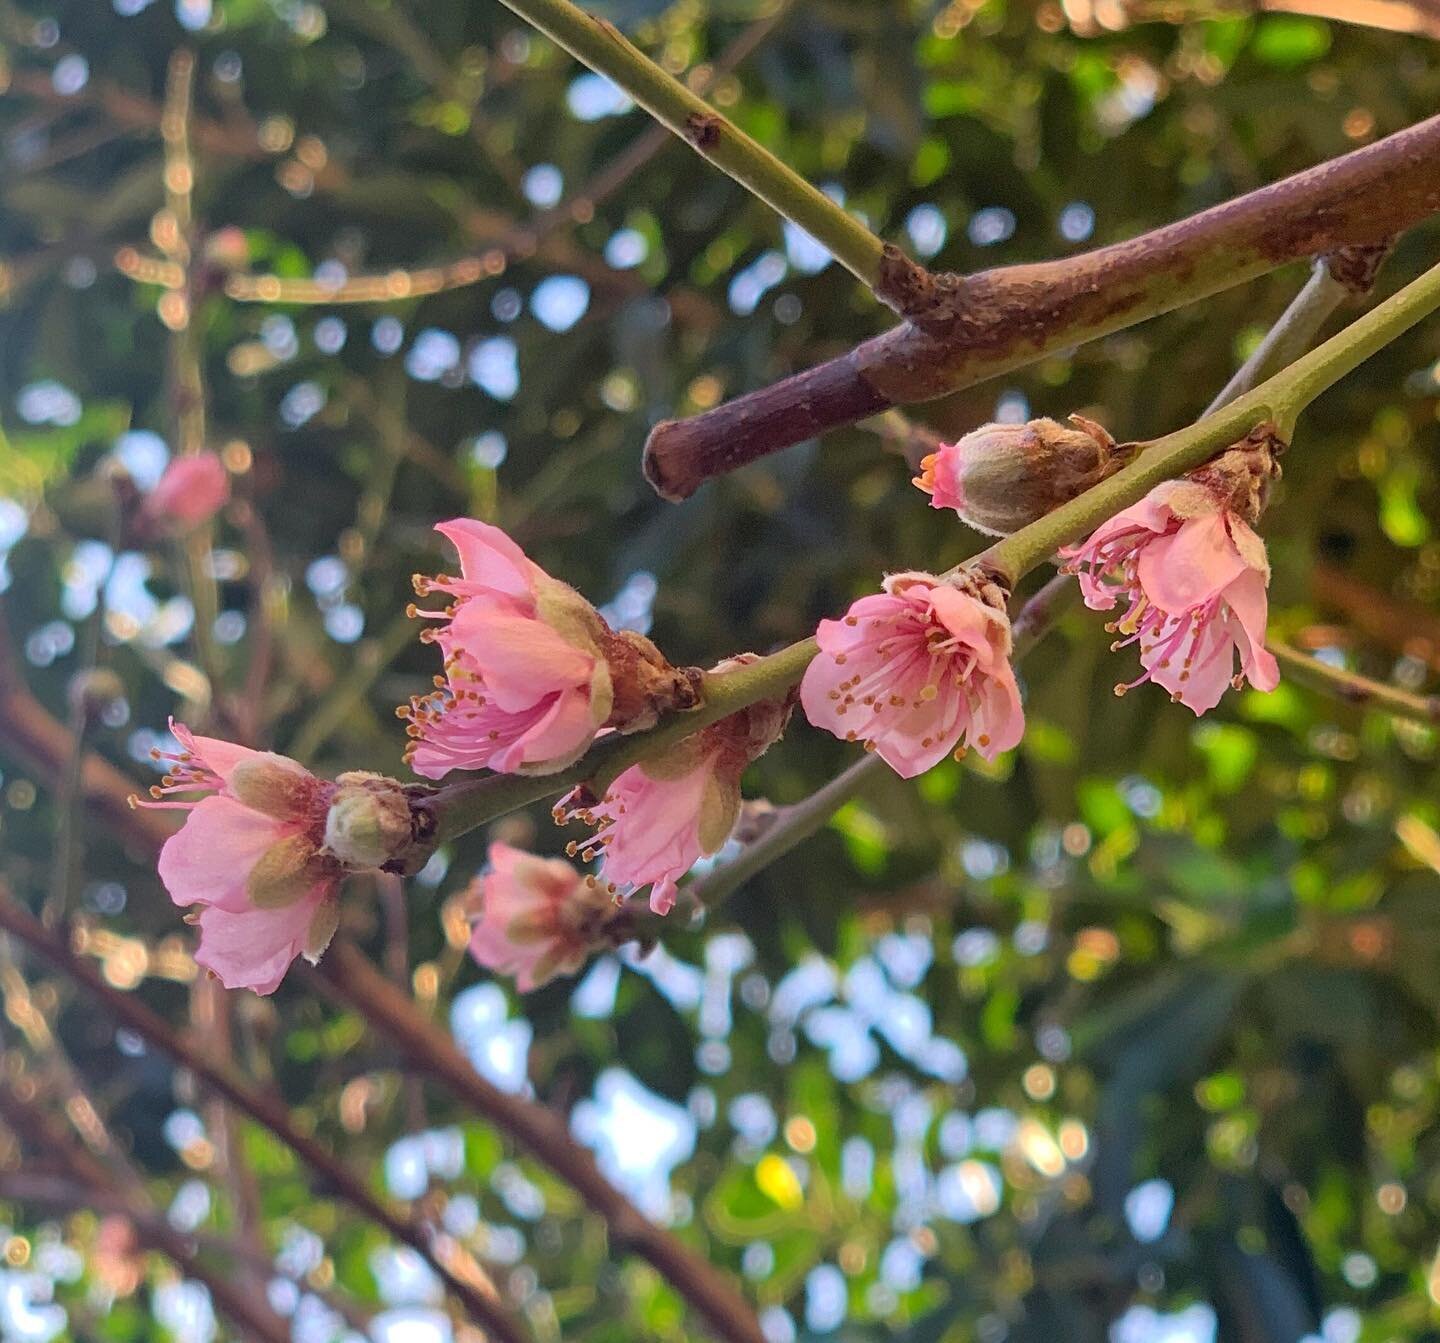 Blooming peach tree in my backyard🌸🍑💖 #fivesensesinteriordesign #springblooms #beautyinnature